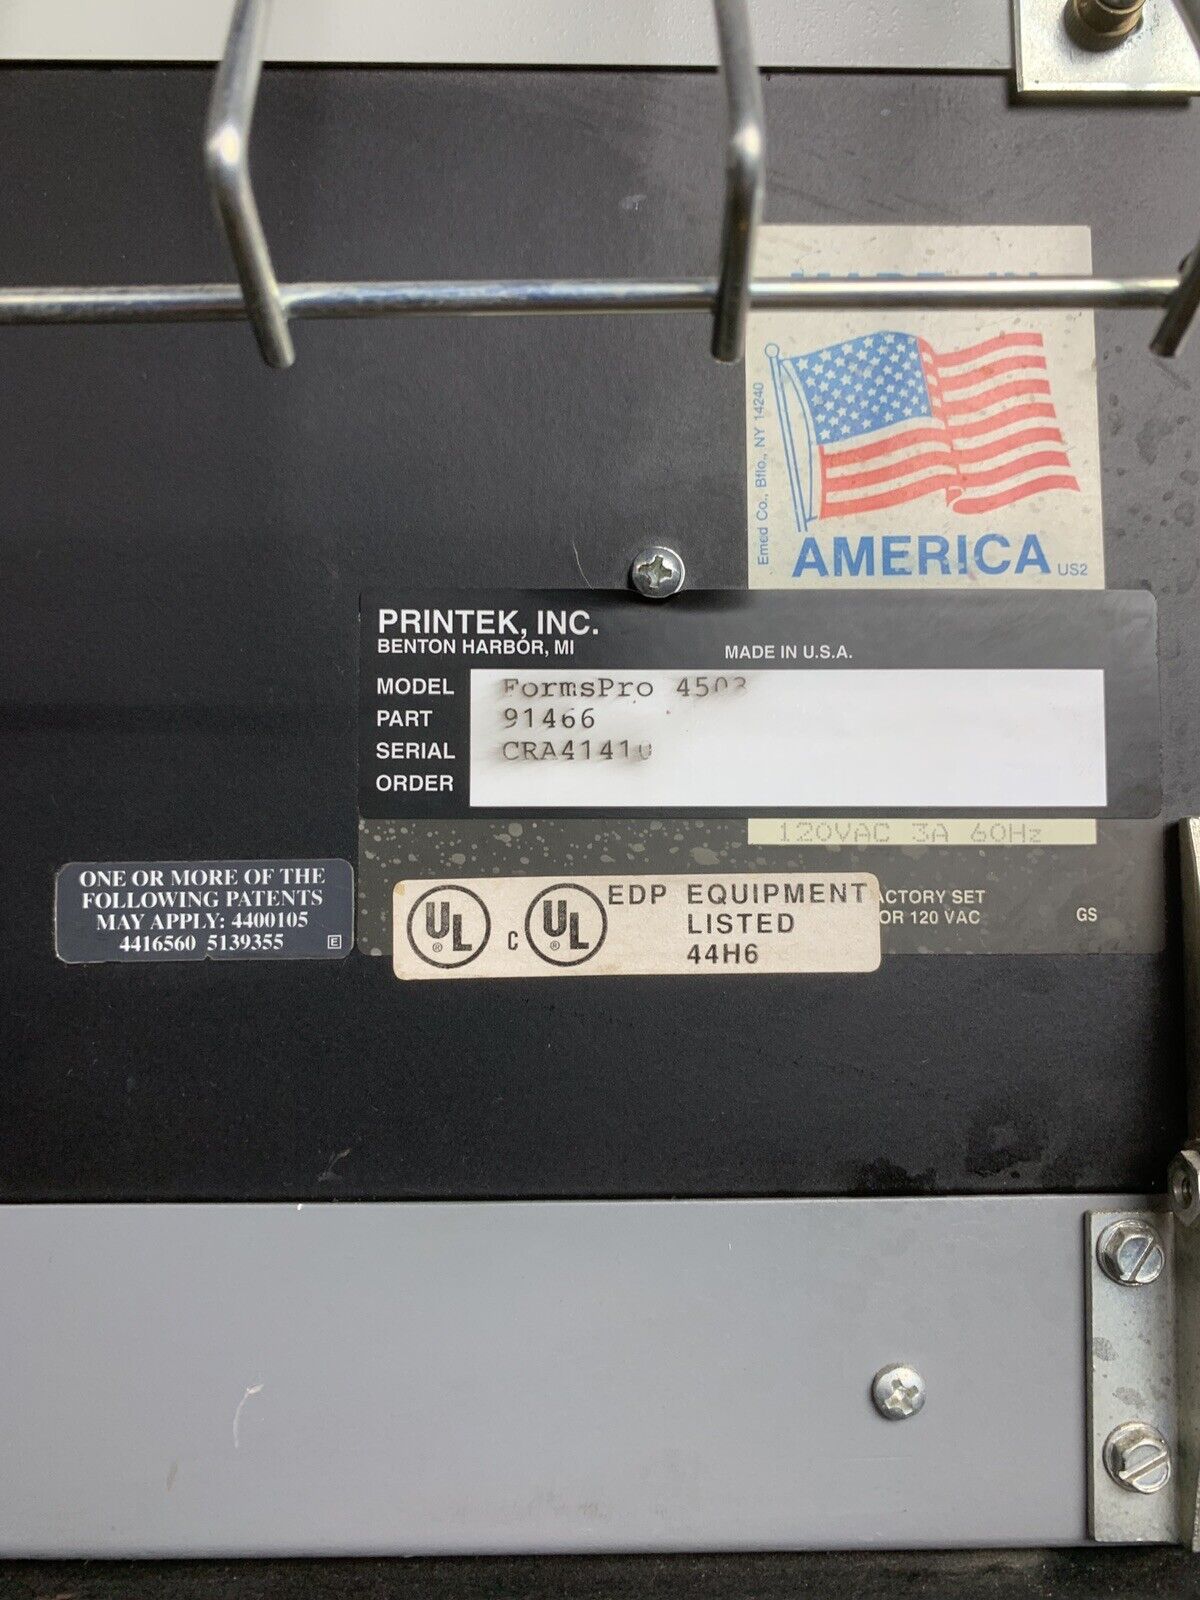 Printek Formspro 4503 90484 Dot Matrix Printer Tested